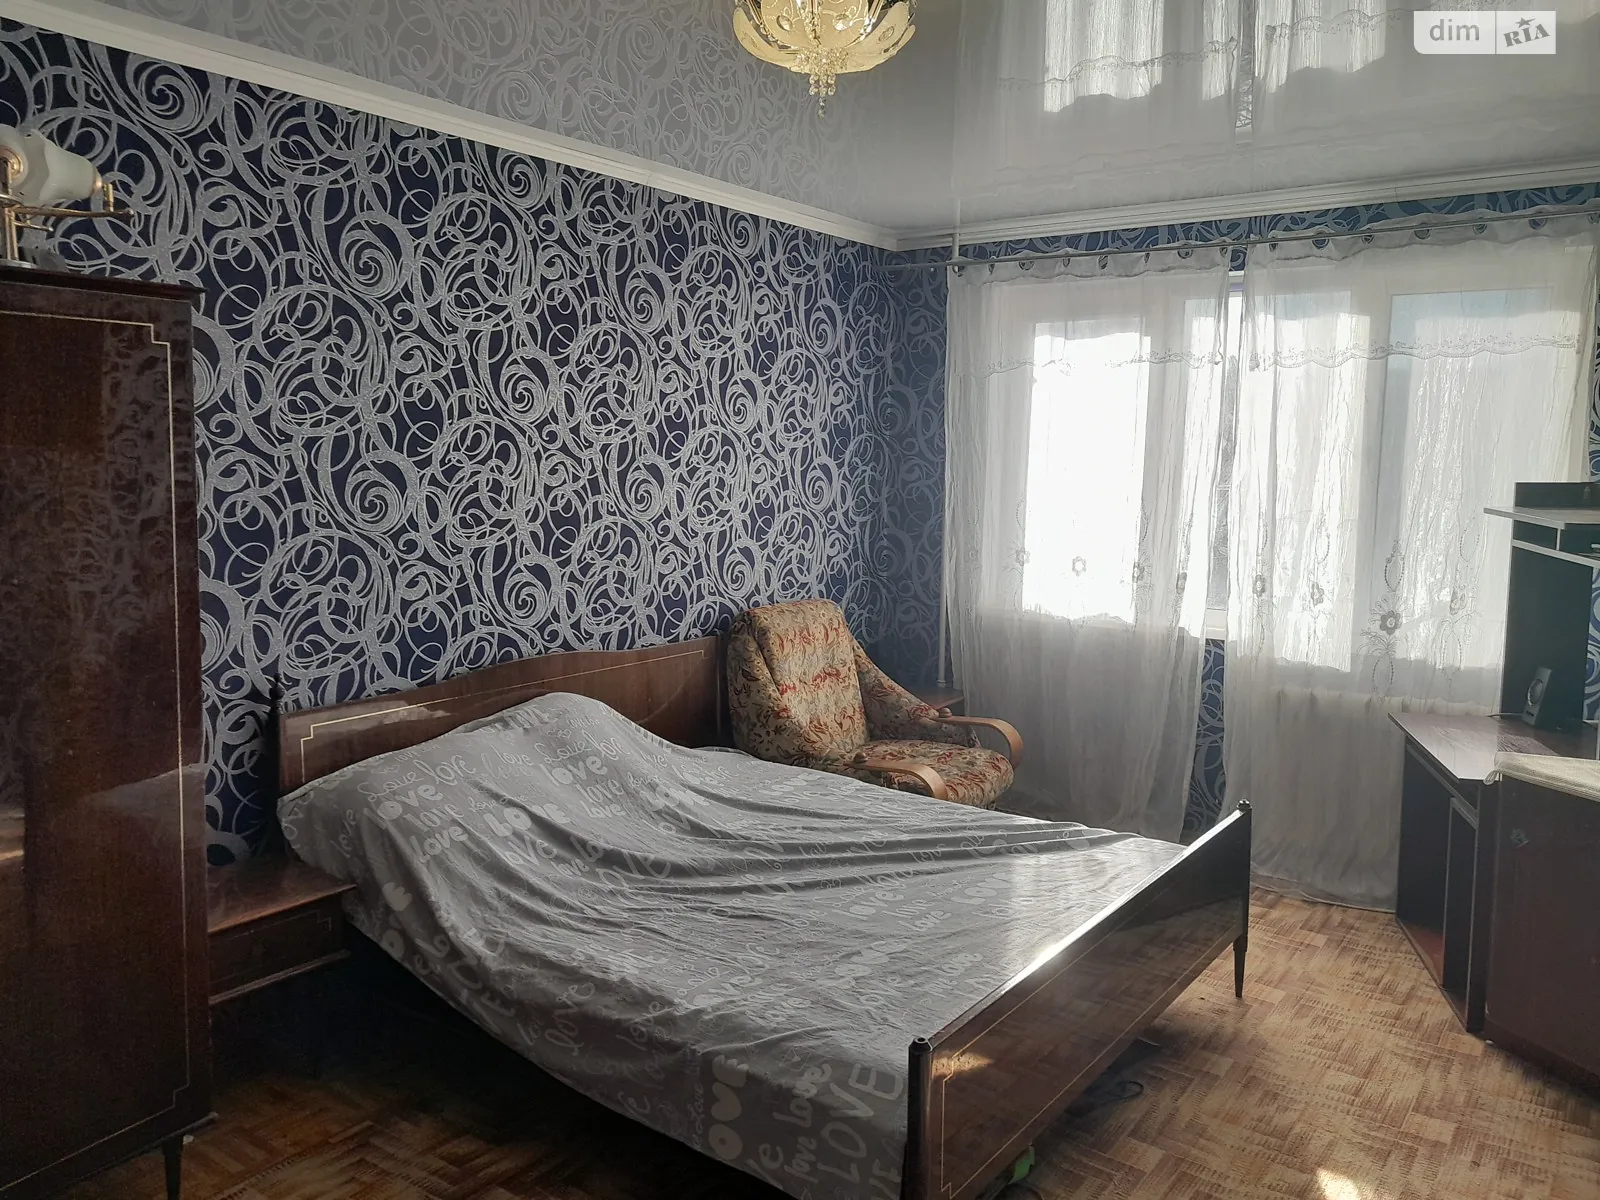 Сдается в аренду 2-комнатная квартира 50 кв. м в Одессе, ул. Академика Королева, 8 - фото 1